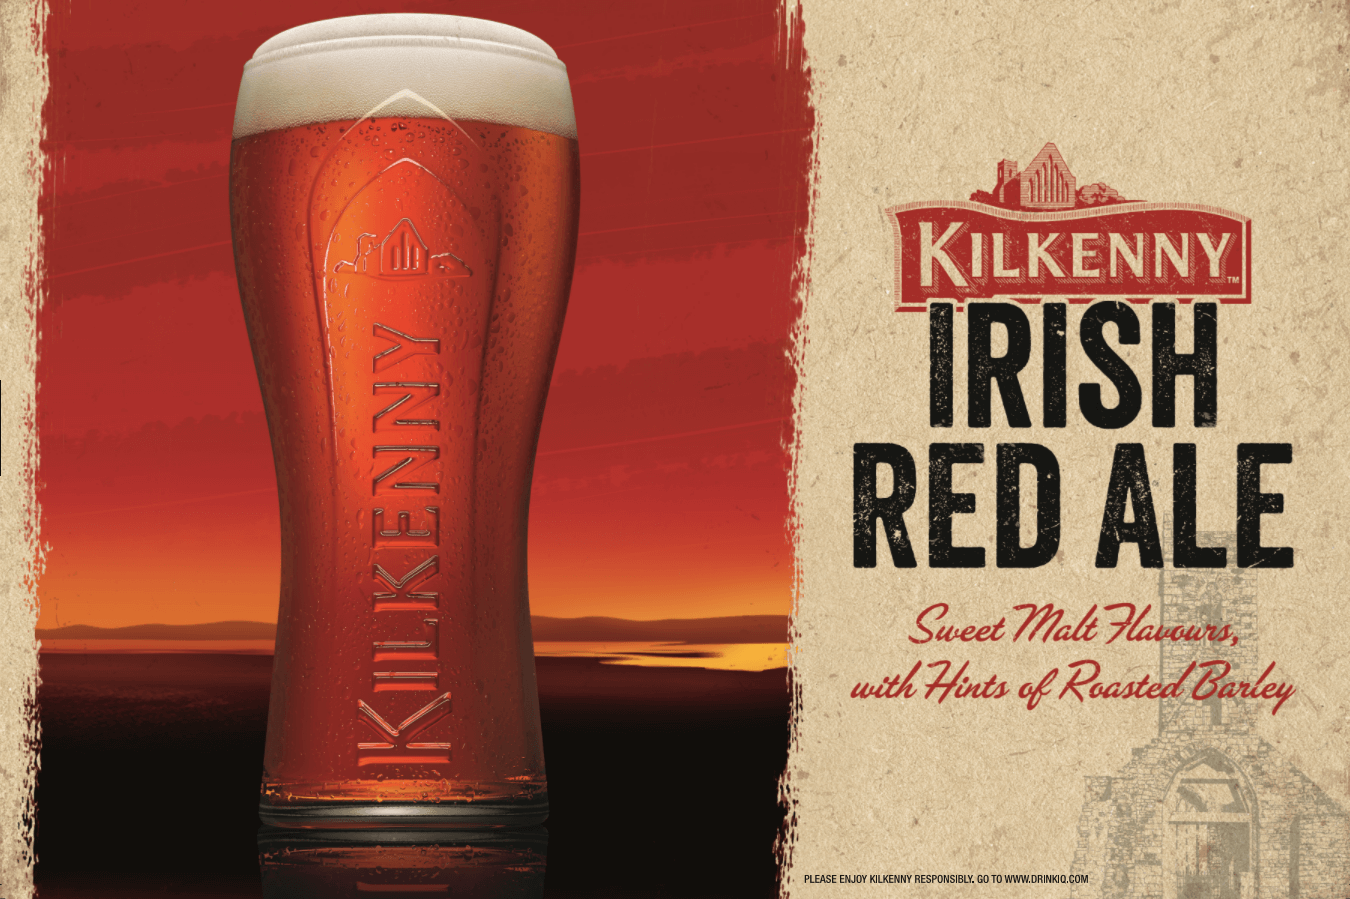 Kommunist Maleri pinion Kilkenny Irish Red - Premium Beer and Beverages